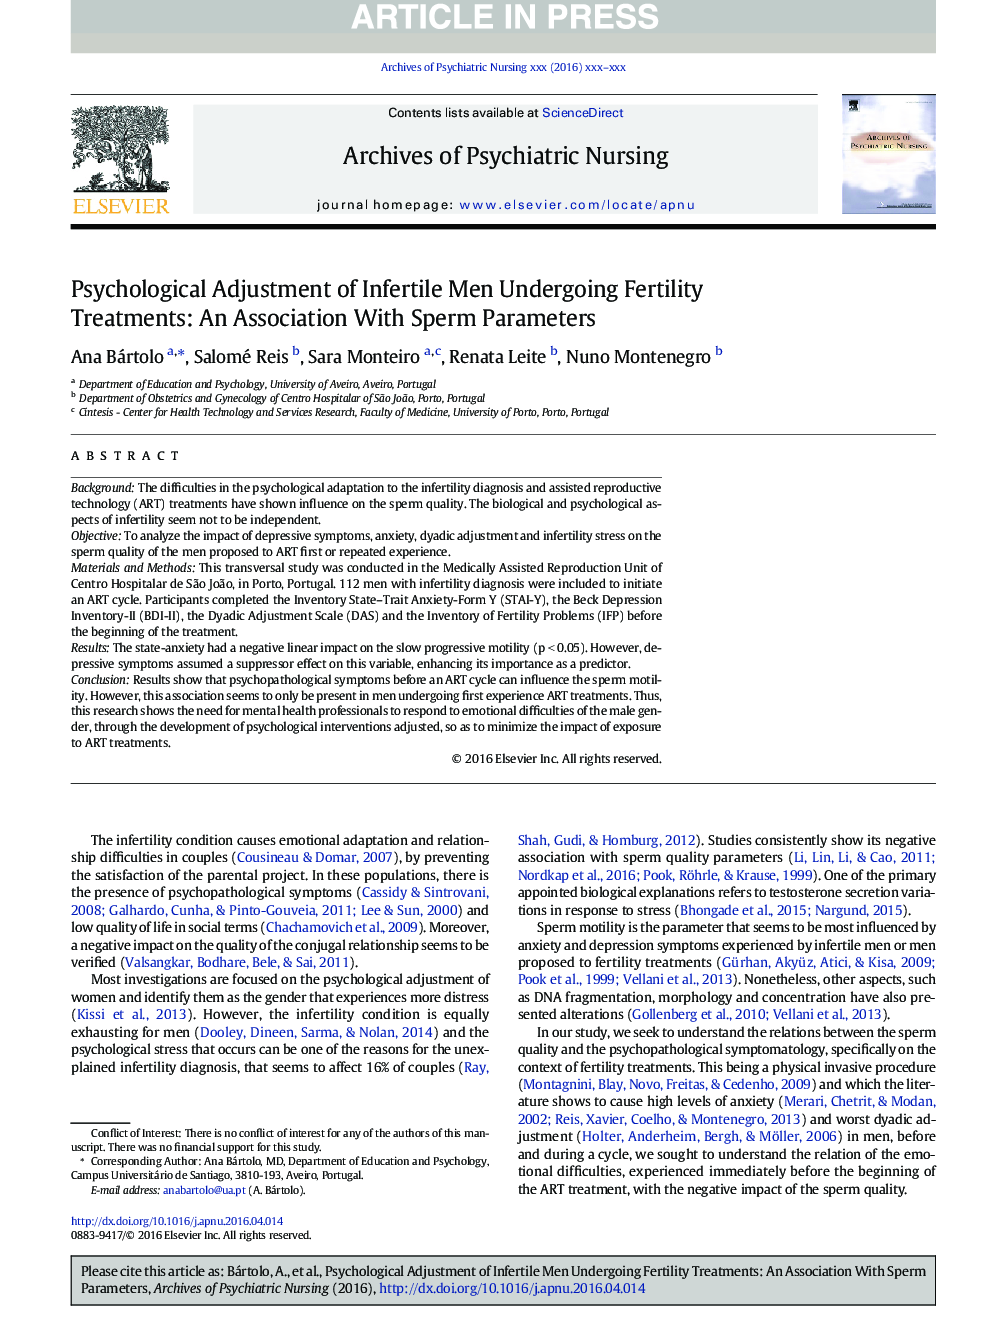 Psychological Adjustment of Infertile Men Undergoing Fertility Treatments: An Association With Sperm Parameters